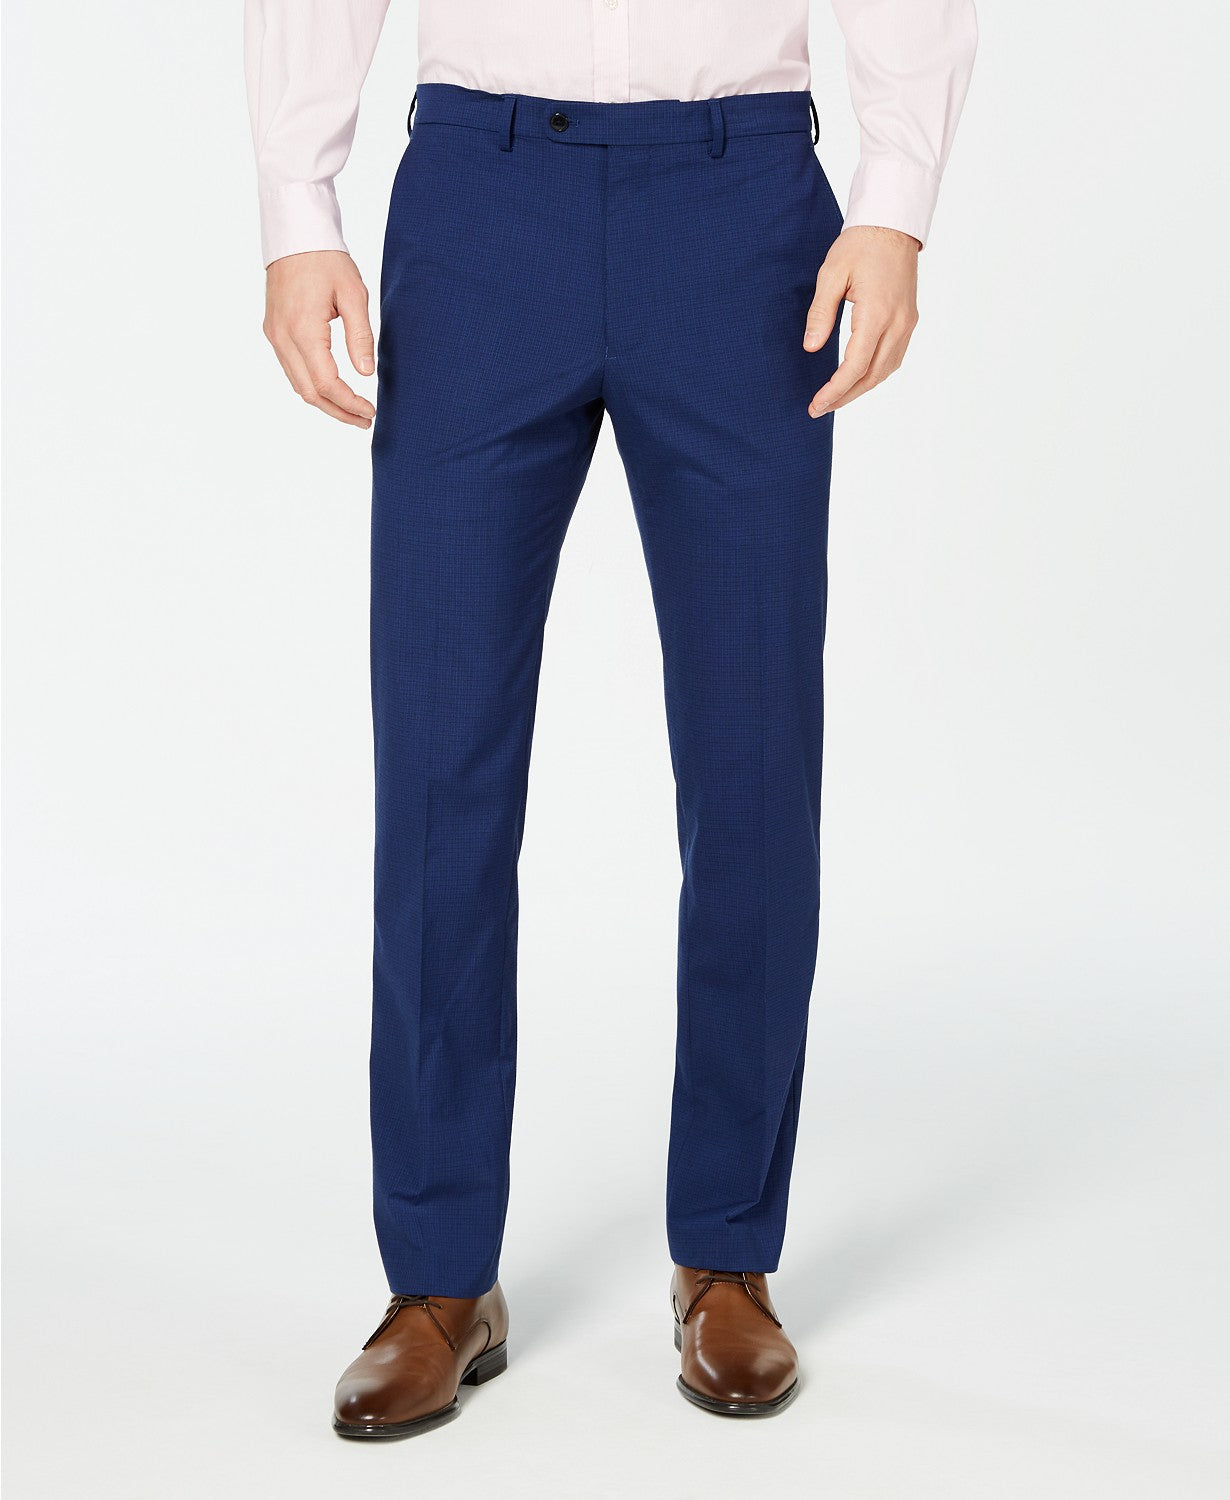 Vince Camuto Slim-Fit Wrinkle-Resistant Blue Check Dress Pants 33 x 32